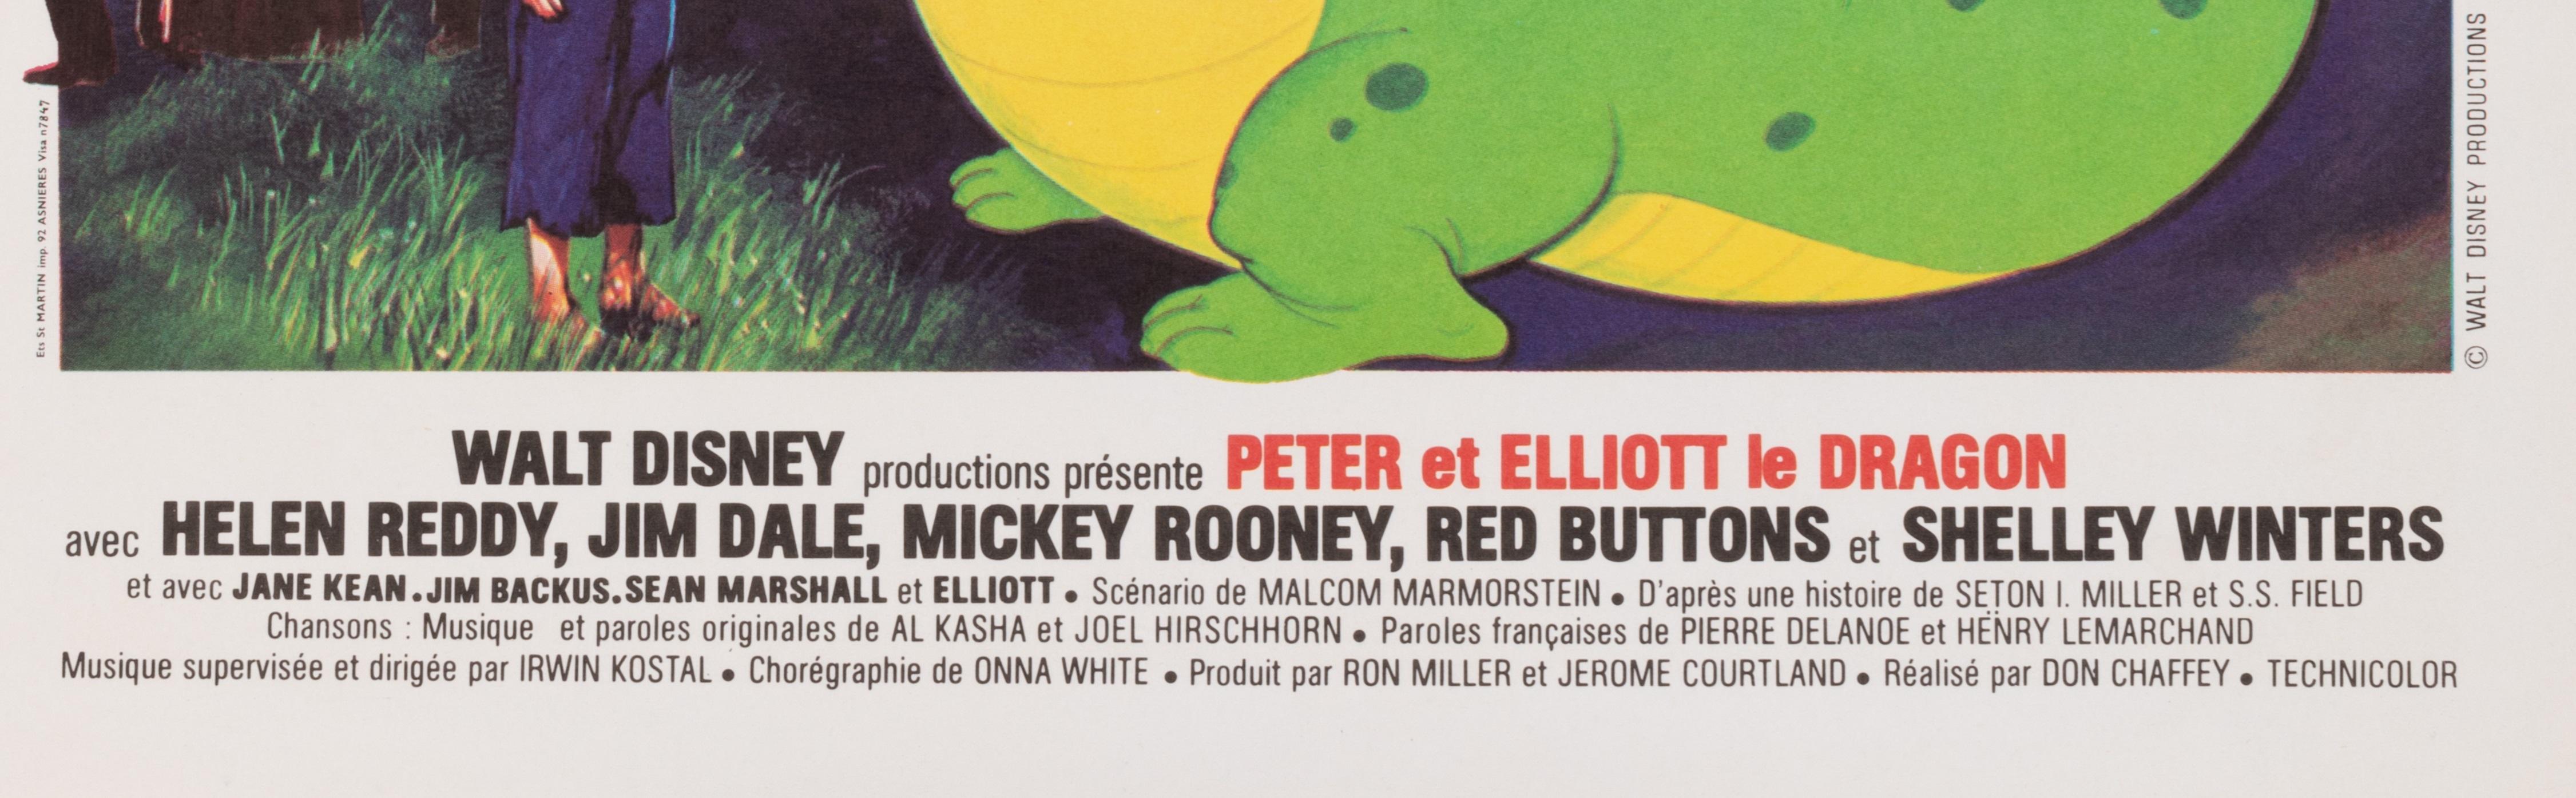 French Original Movie Poster, Peter and Elliott Dragon, Walt Disney, Cartoon Child 1980 For Sale